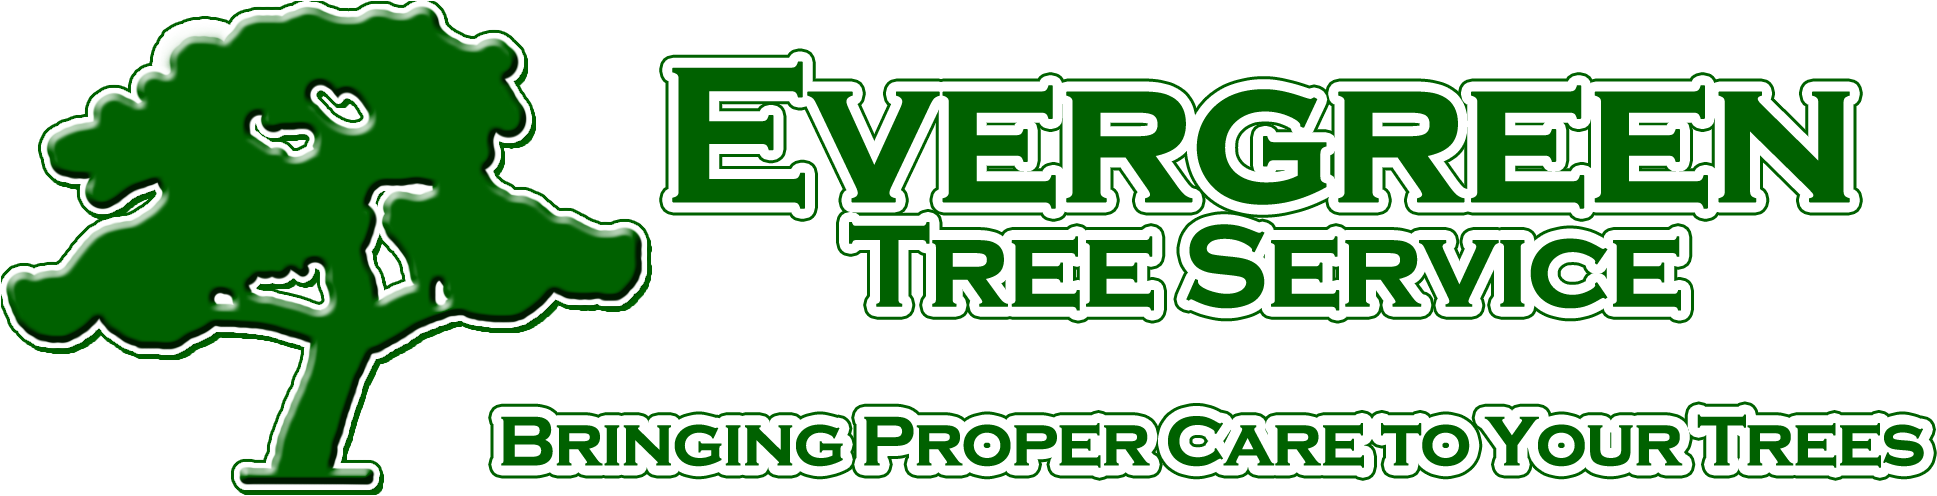 Evergreen Tree Service Mobile Alabama - Evergreen Tree Service (2000x506)